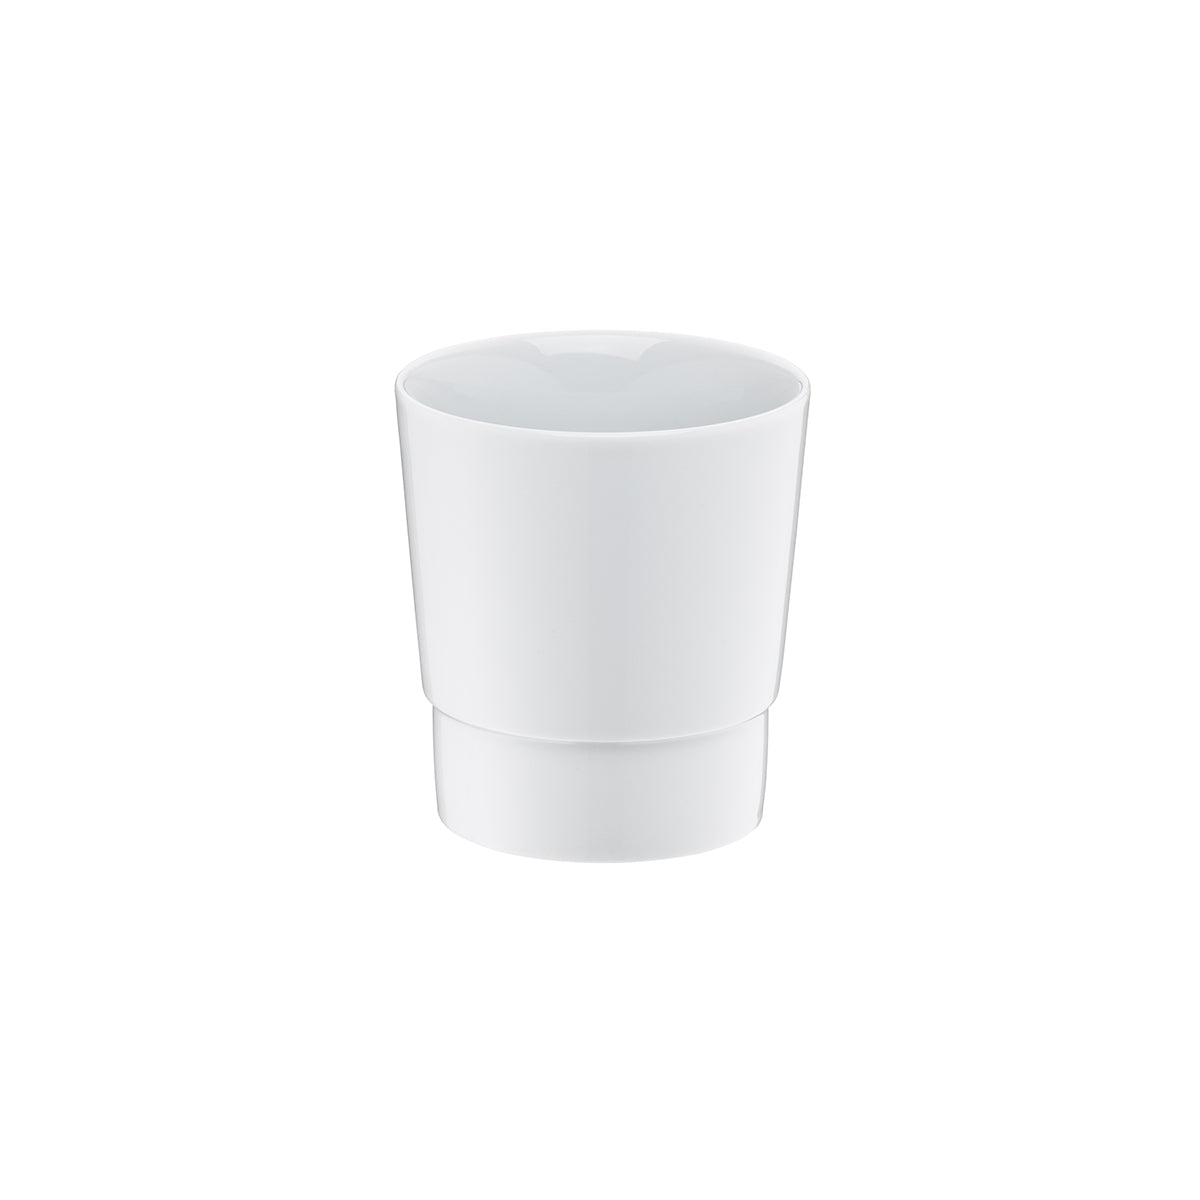 55.0111.9805 WMF CultureCup Porcelain Cup Medium High 240ml Tomkin Australia Hospitality Supplies